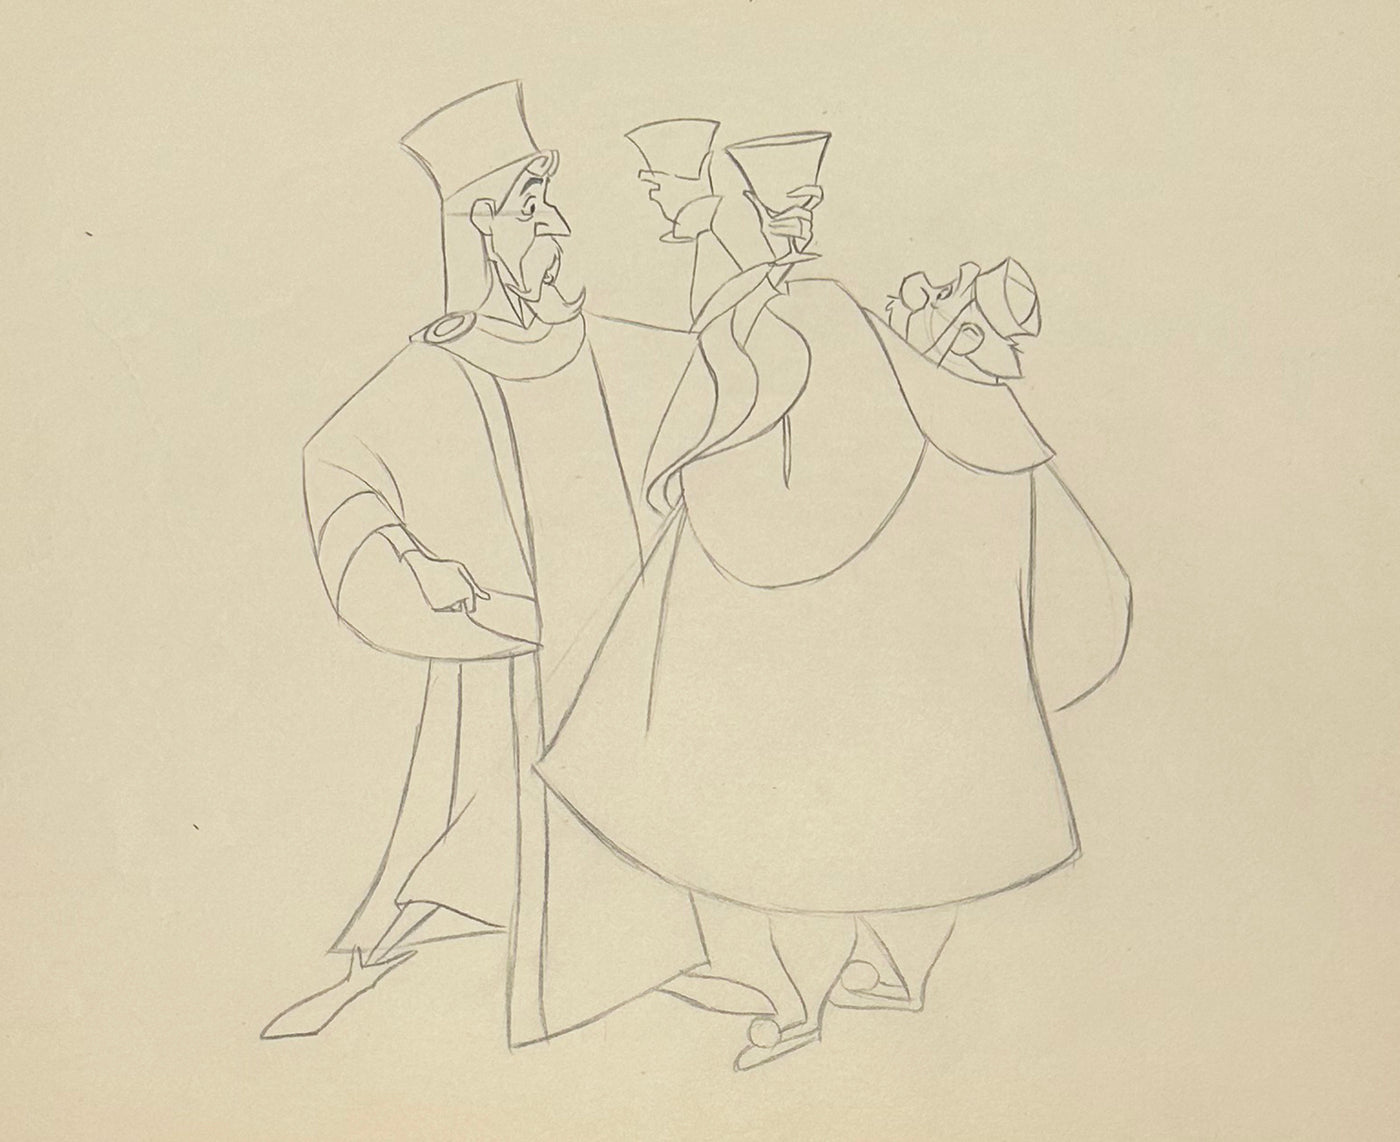 Original Walt Disney Production Drawing from Sleeping Beauty featuring King Stefan and King Hubert